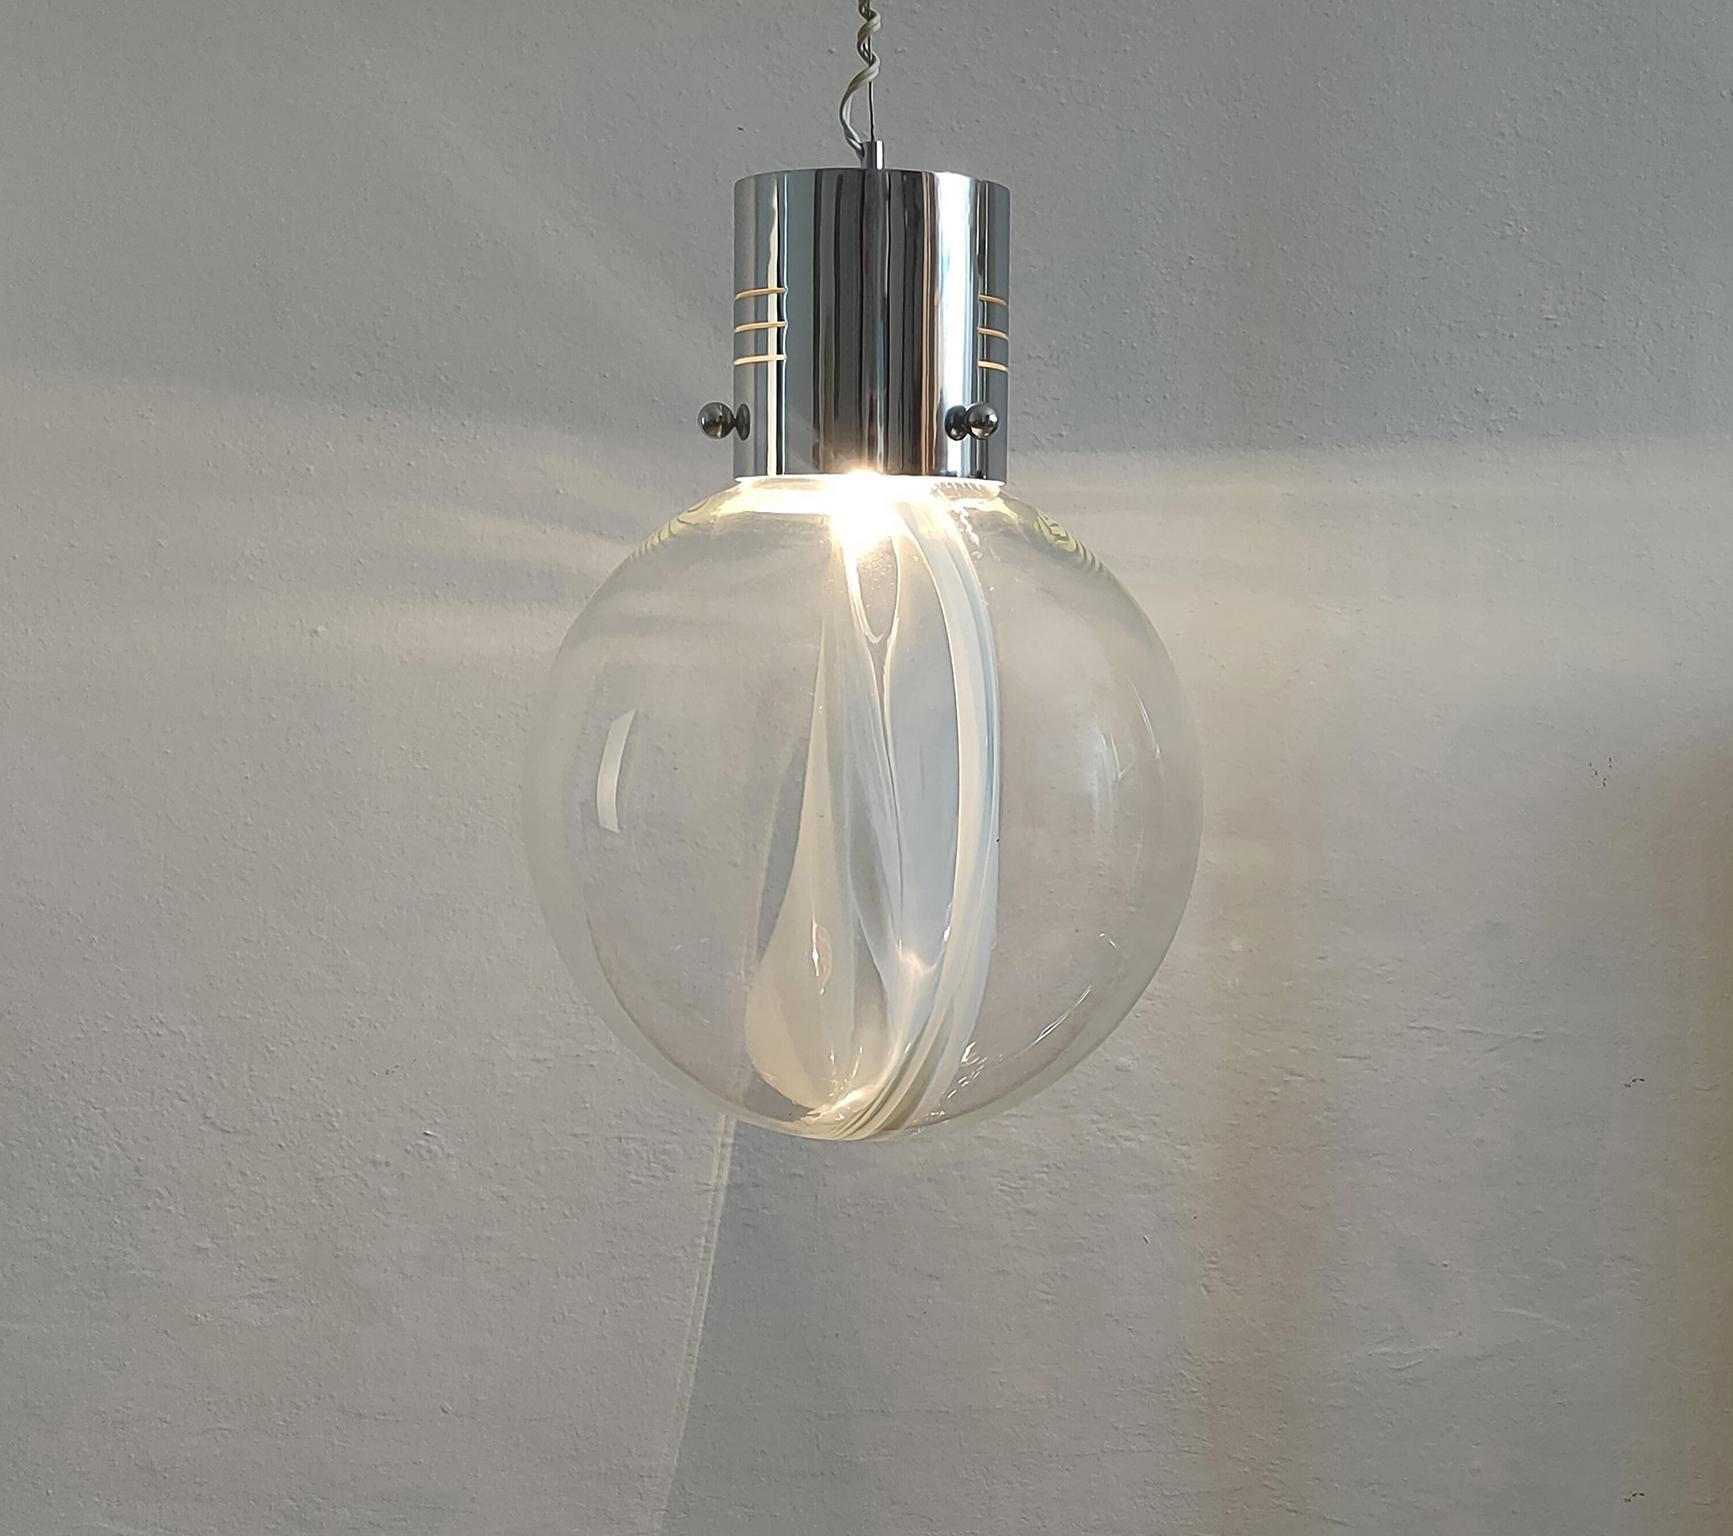 Toni Zuccheri Membrana Ceiling Lamp in Murano Glass by Venini 1960s Italy In Good Condition For Sale In Montecatini Terme, IT